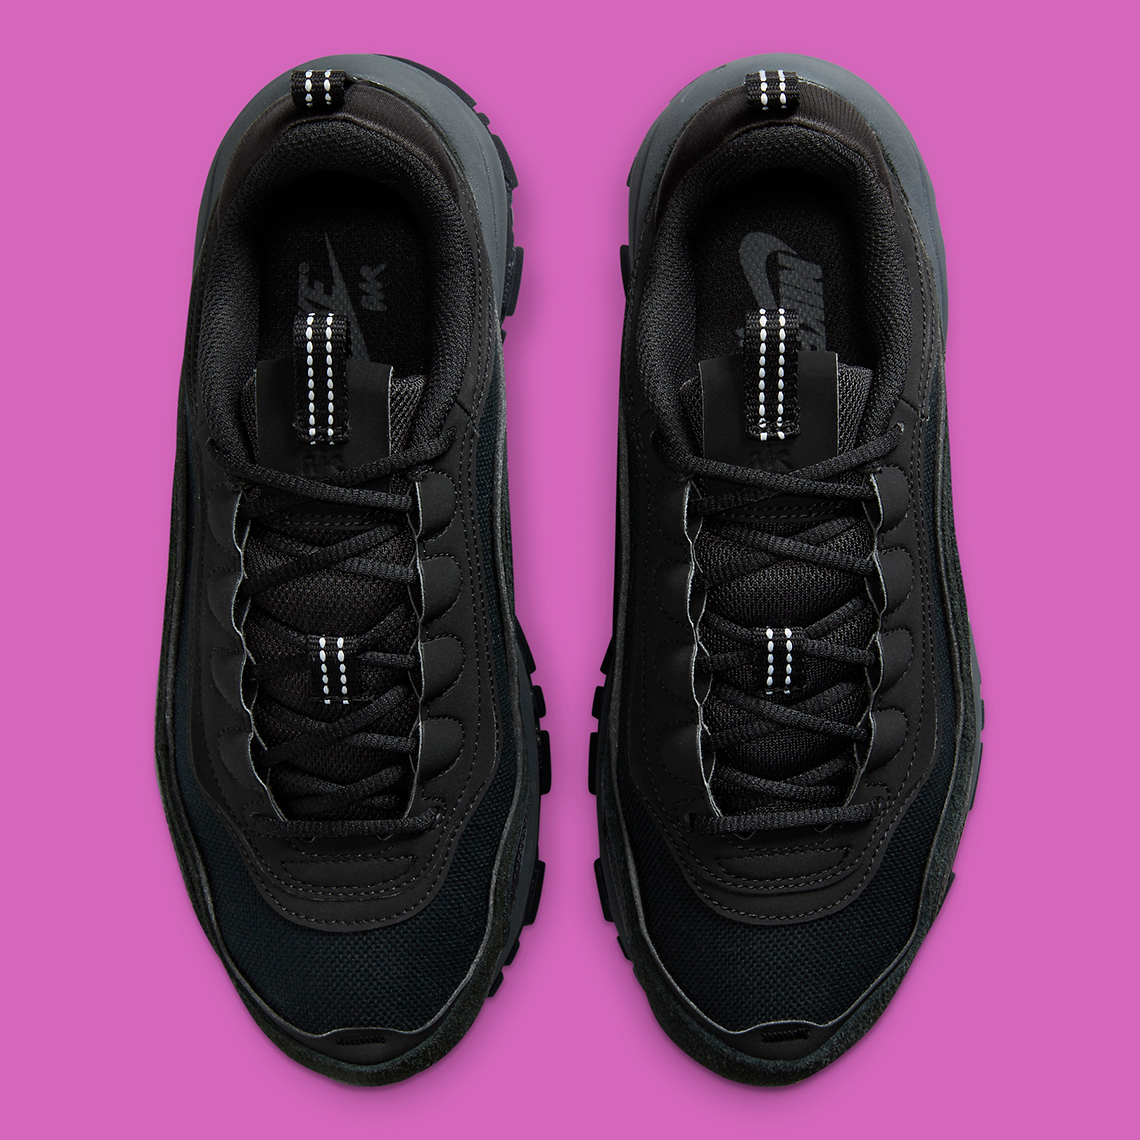 Nike Air Max 97 Futura “Triple Black” Officially Revealed